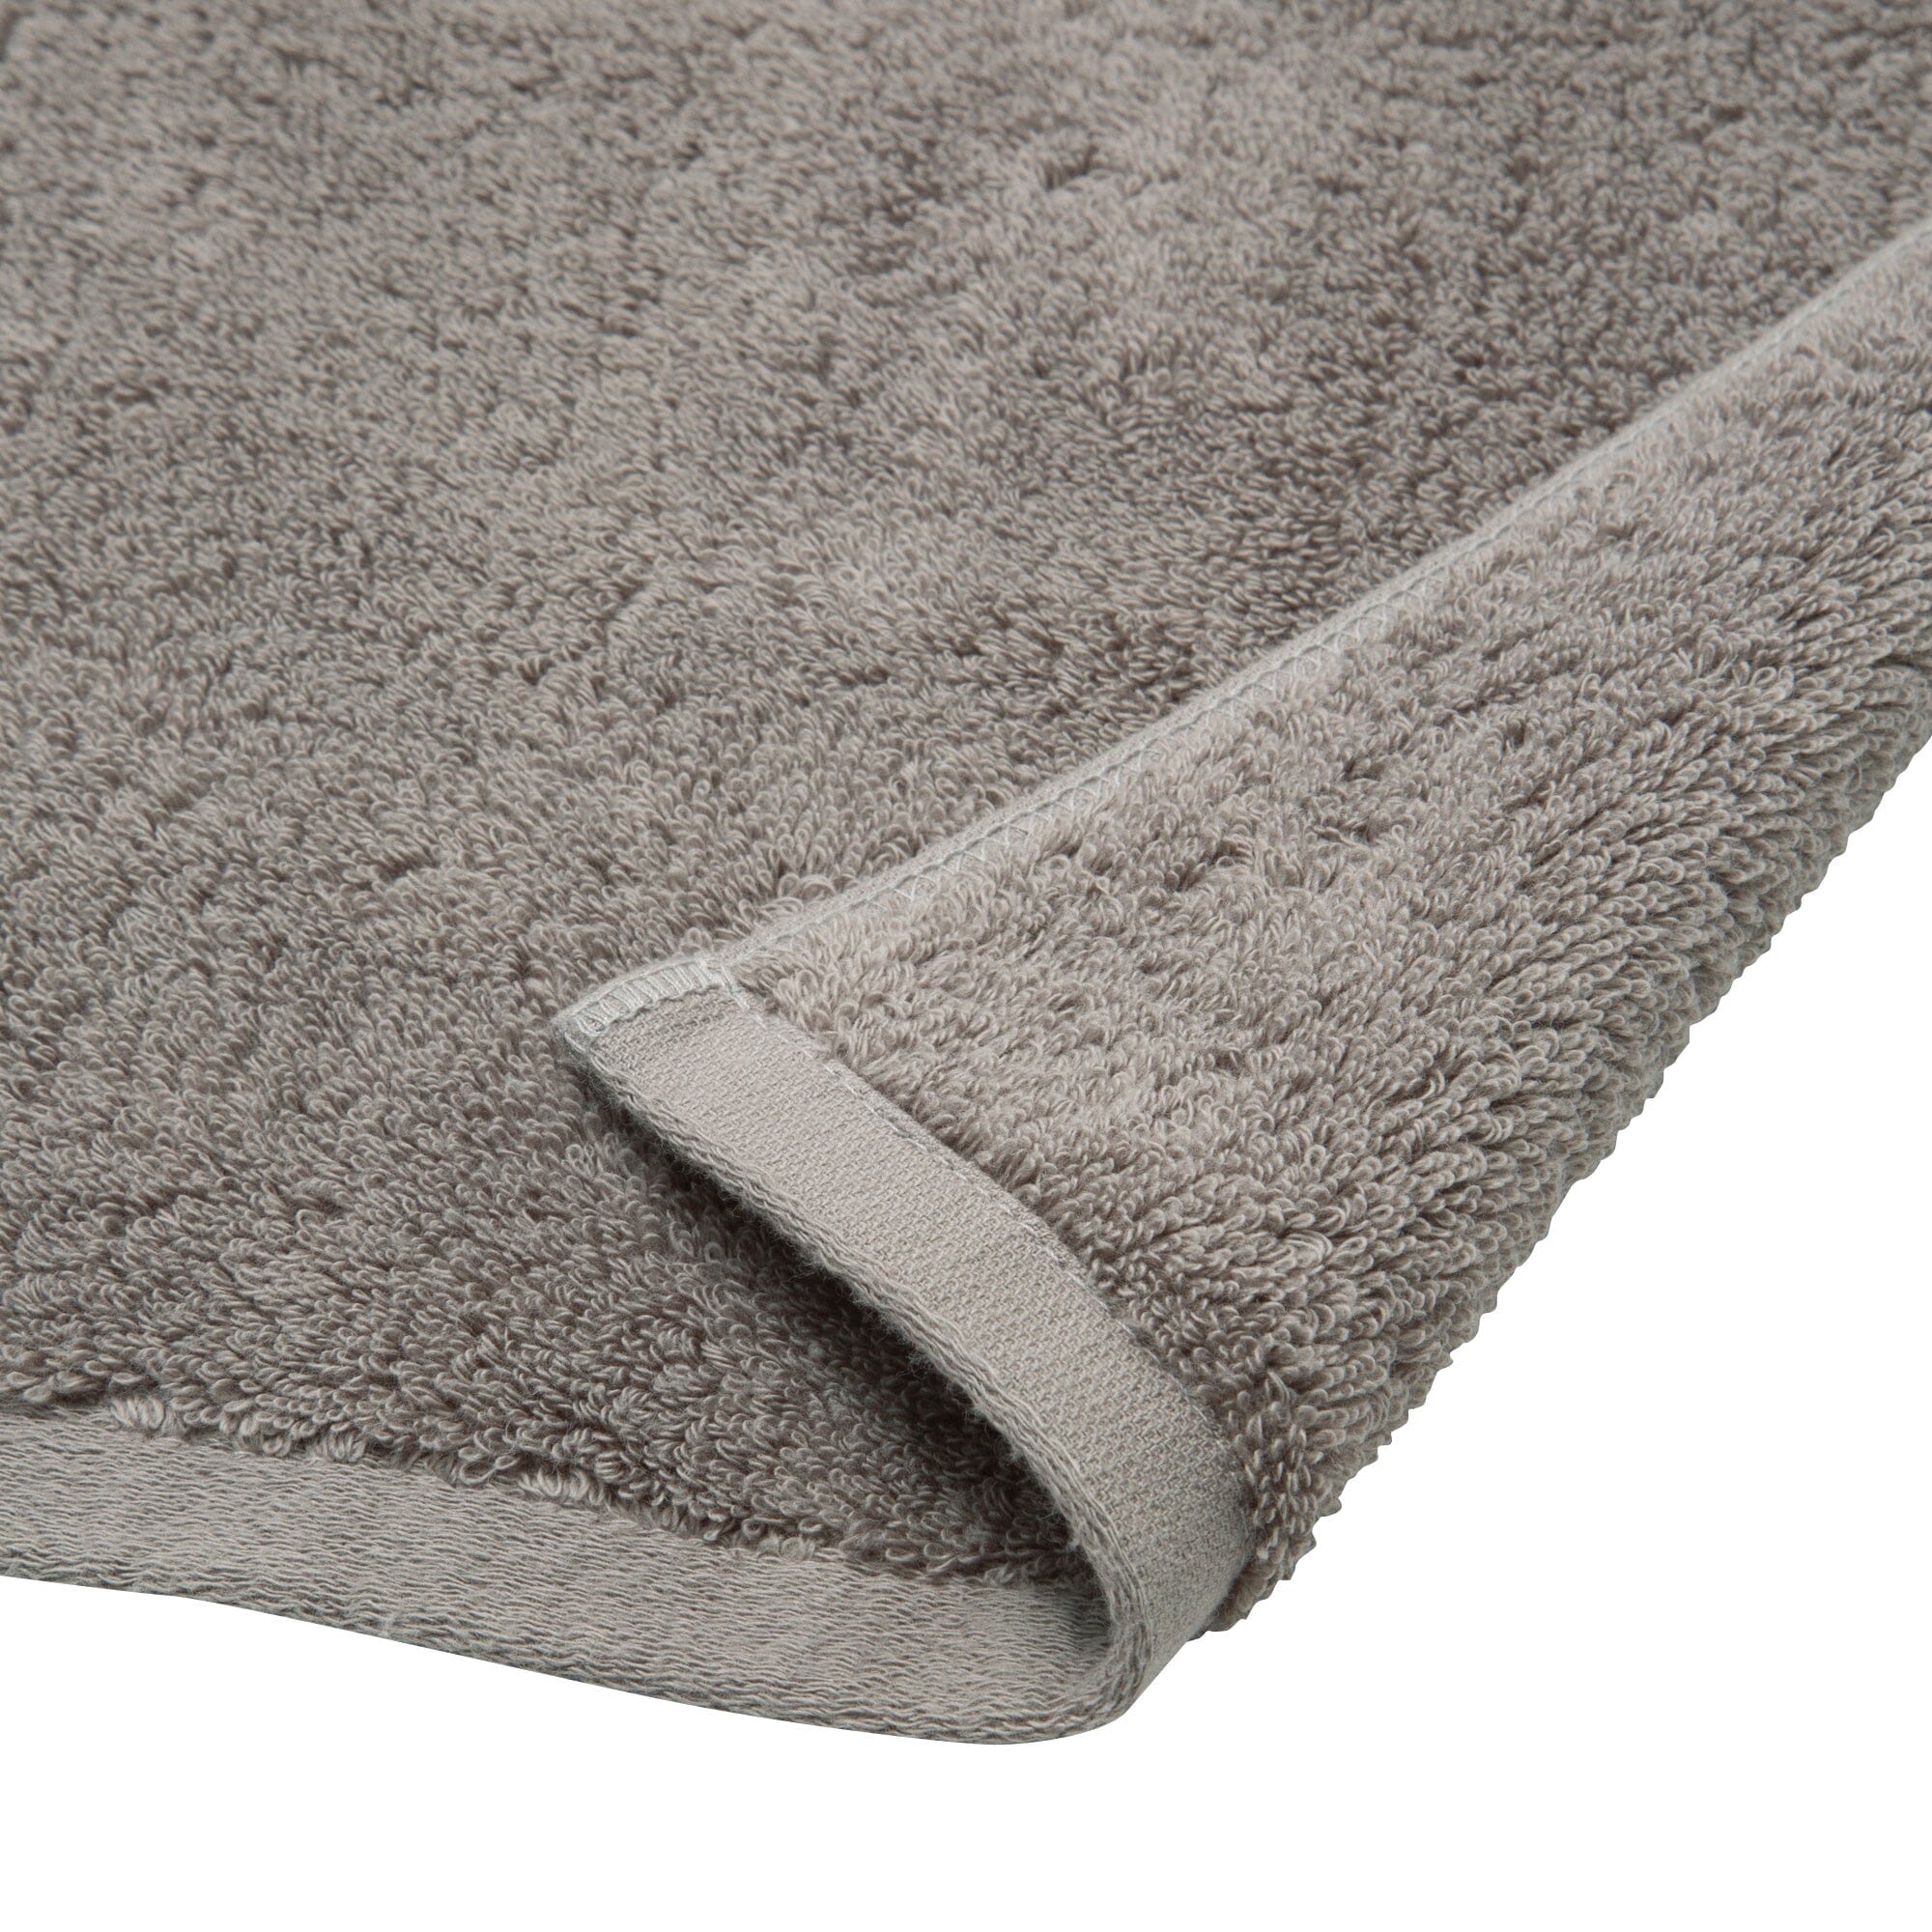 Clean & Soft Face Towel Dark Gray